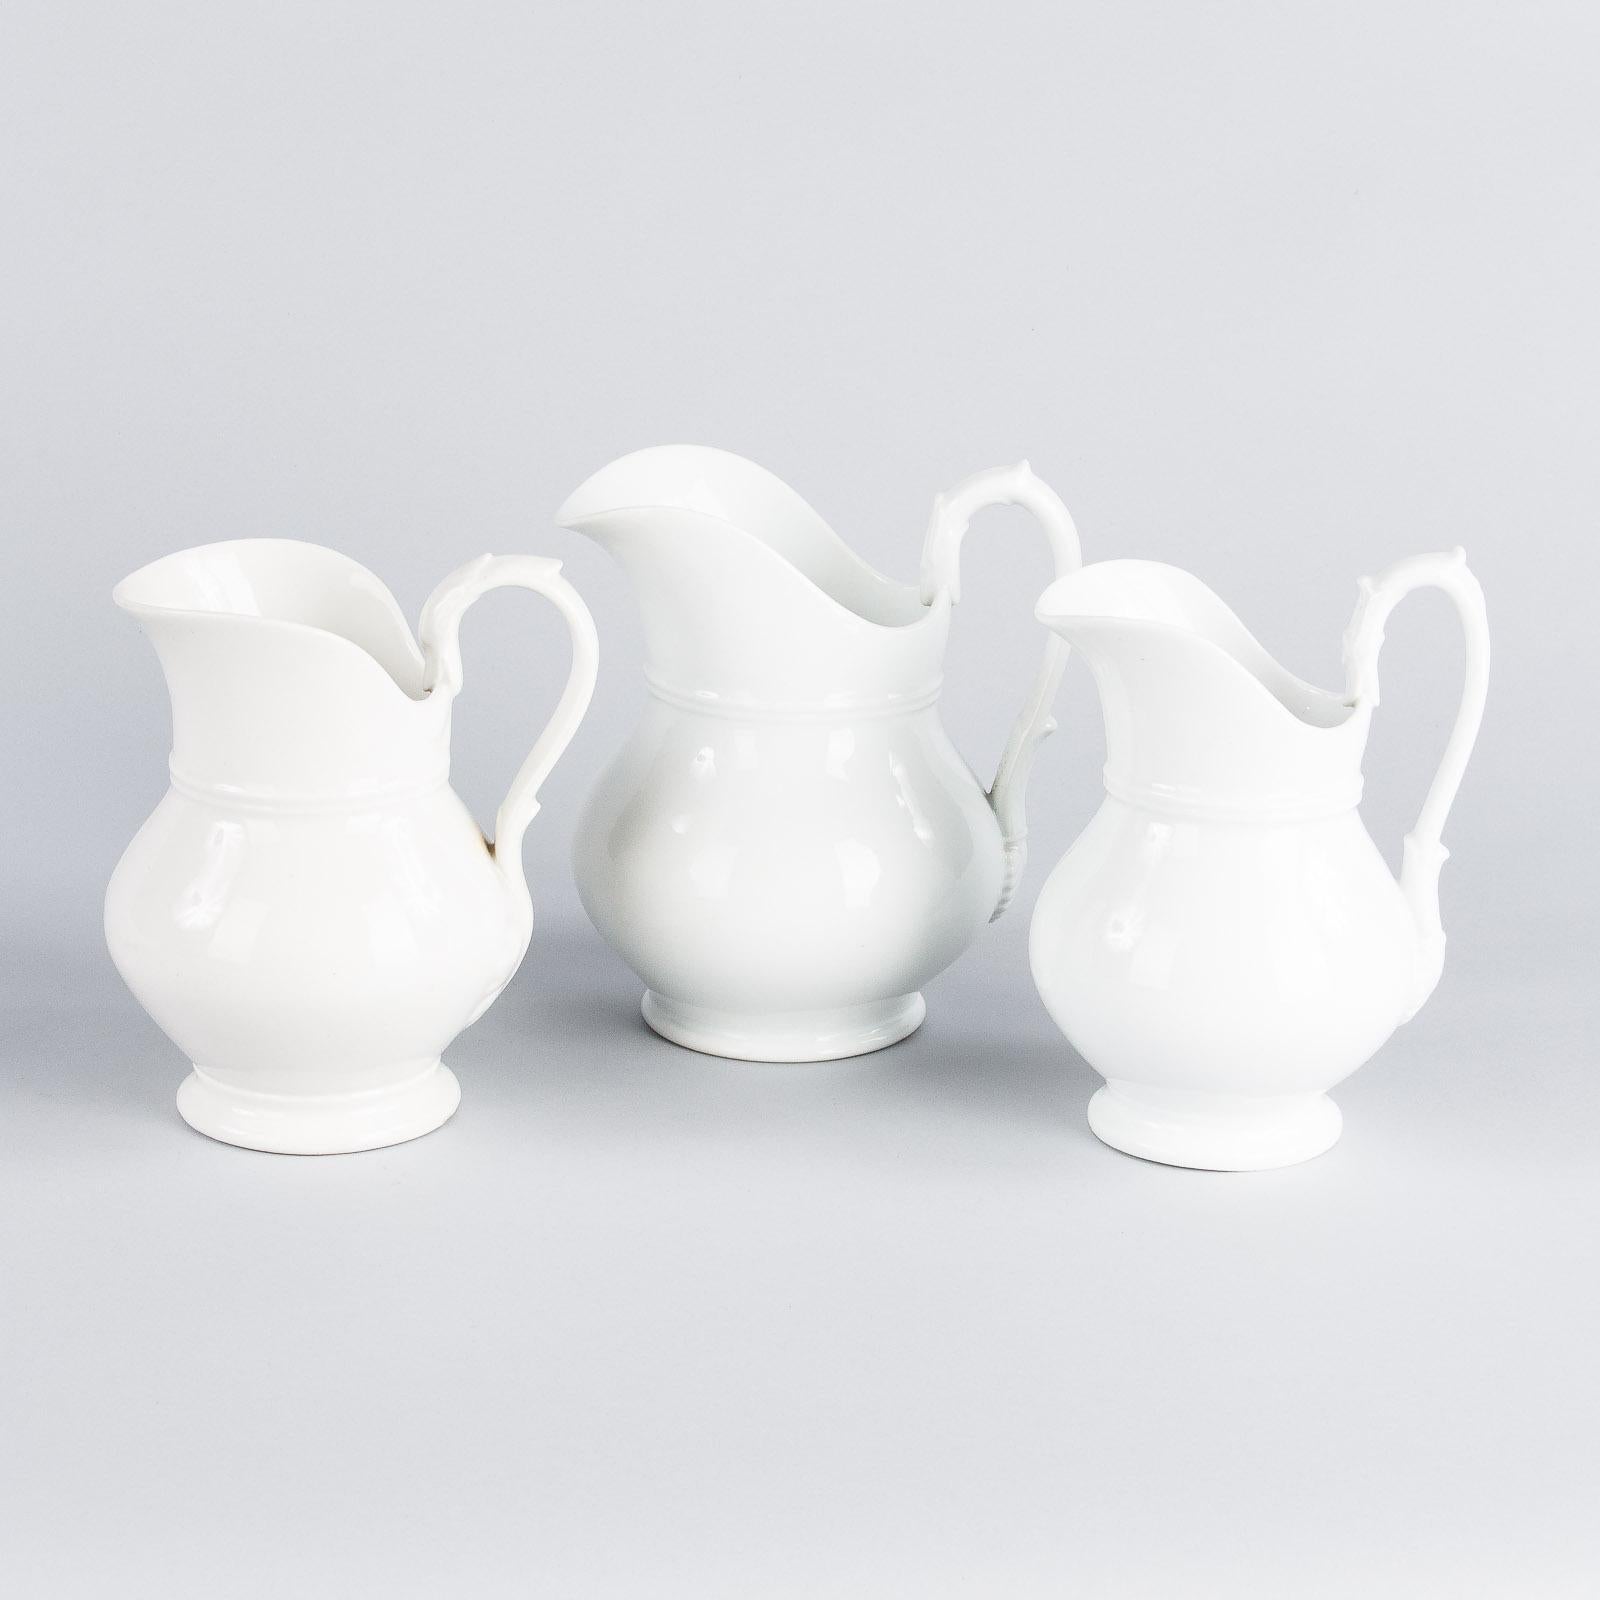 Glazed Set of 3 French Midcentury White Ceramic Pitchers